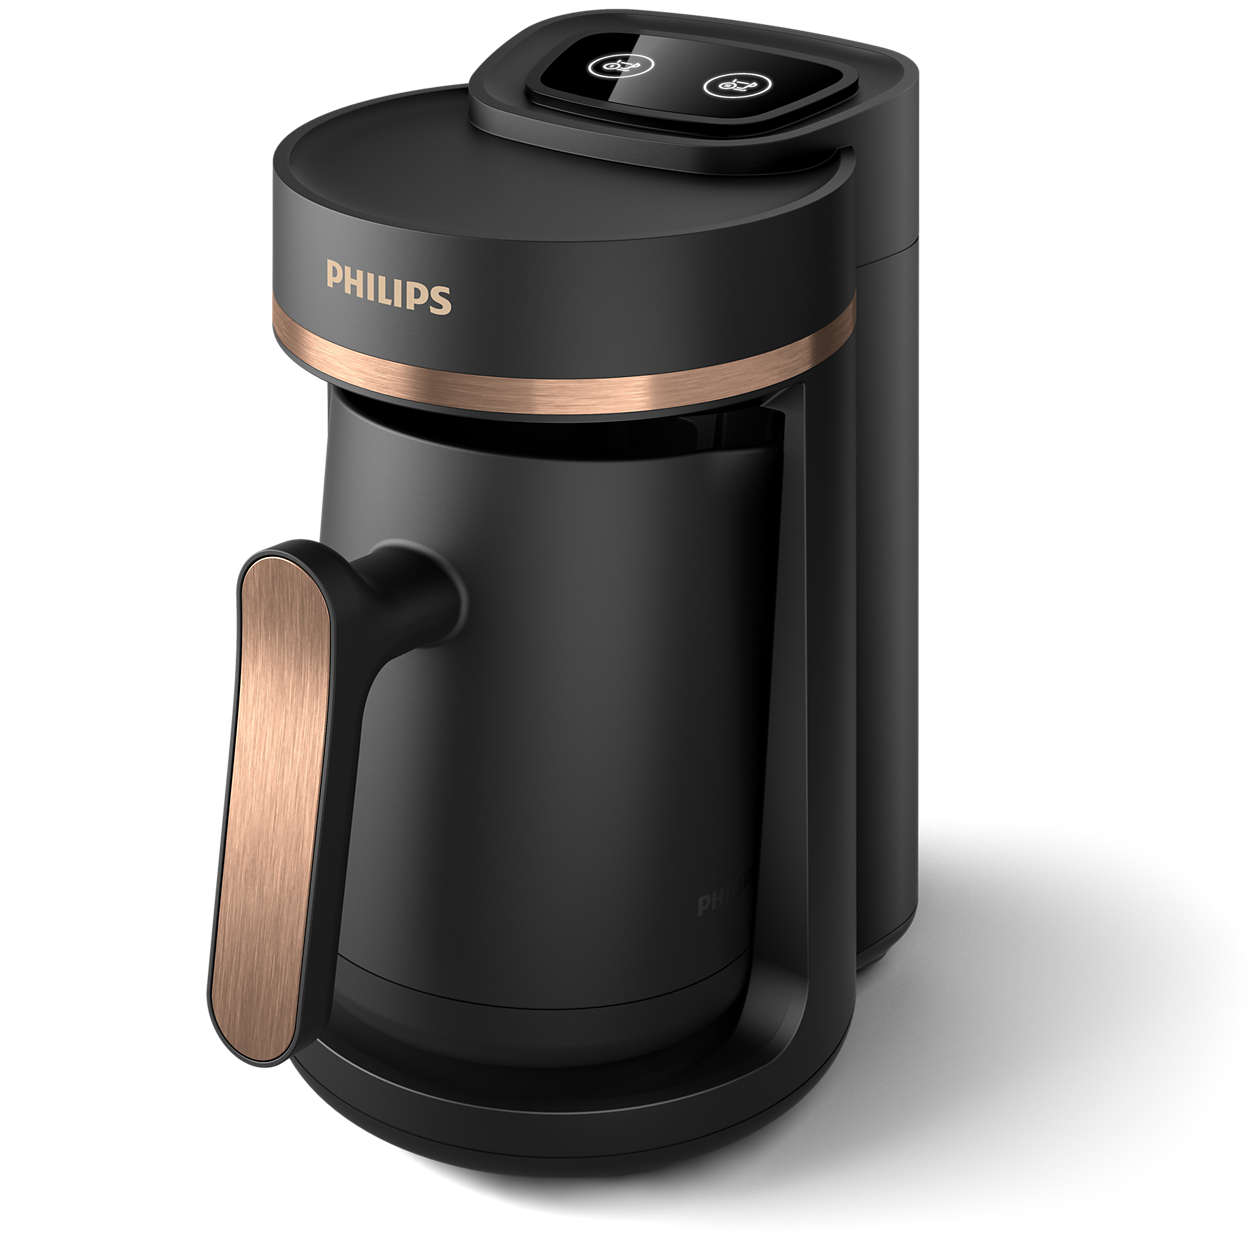 New Philips Turkish Coffee Maker